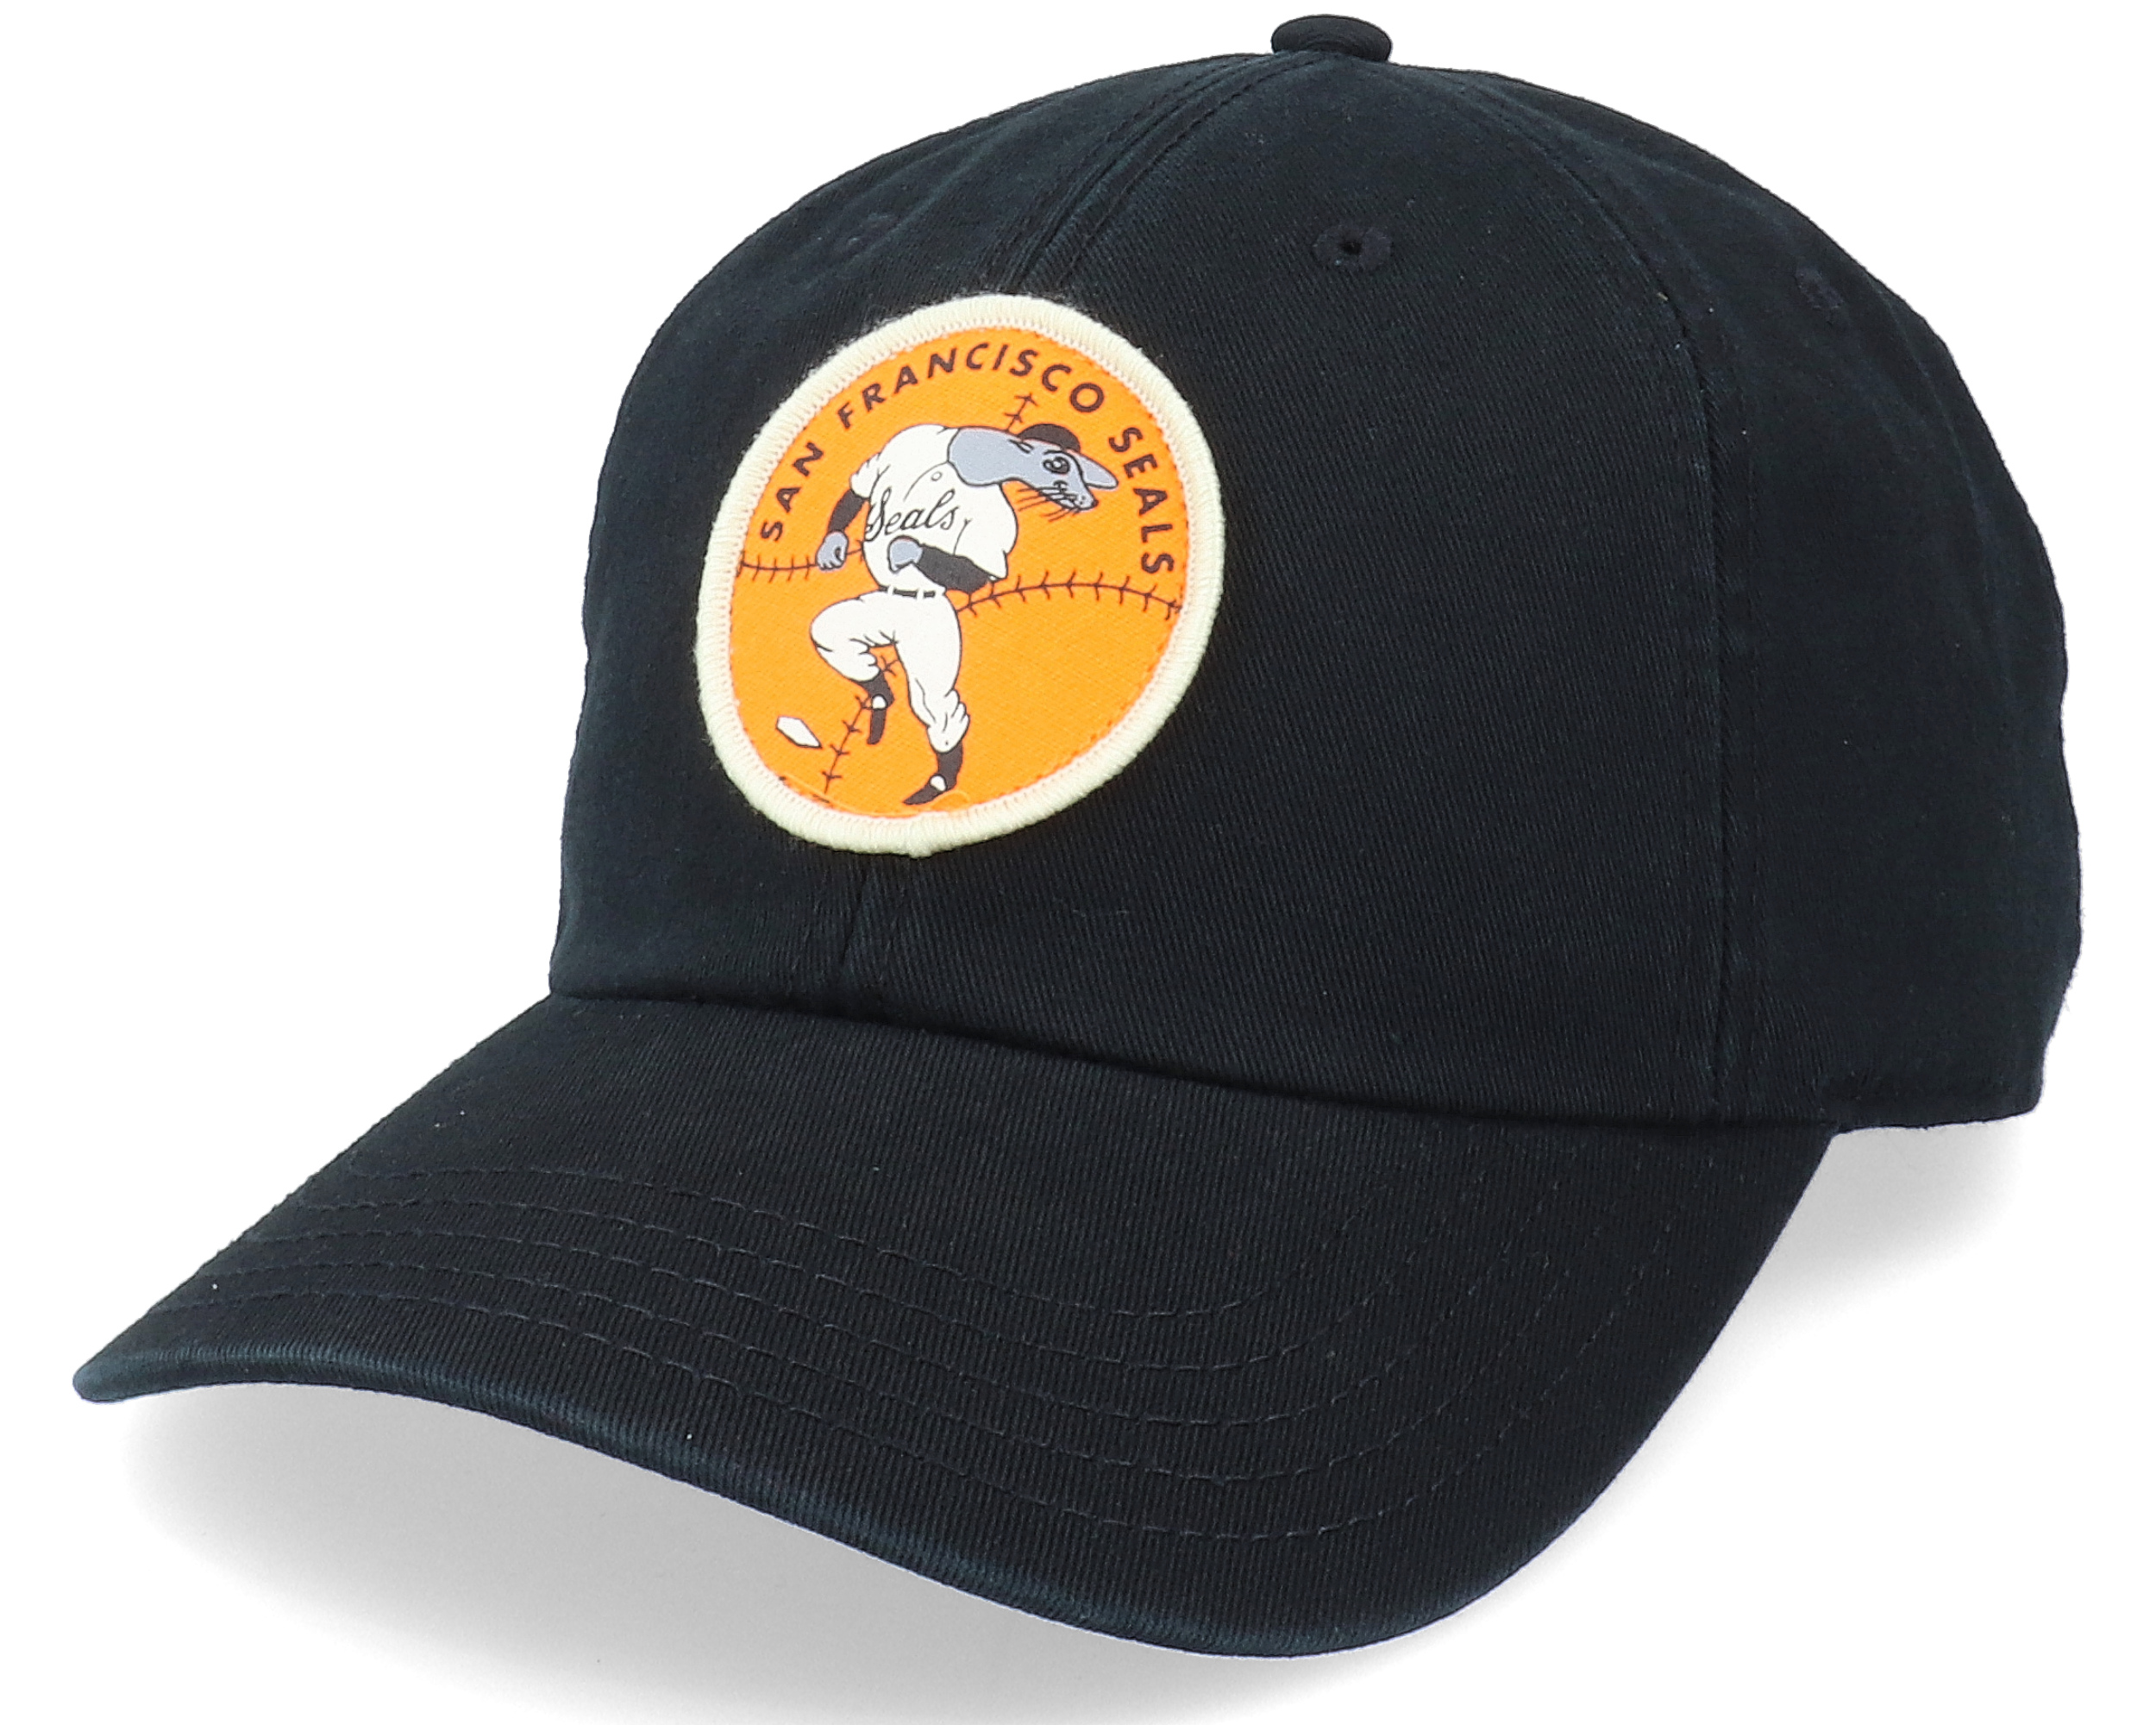 San Francisco Seals Hepcat Black Dad Cap - American Needle cap